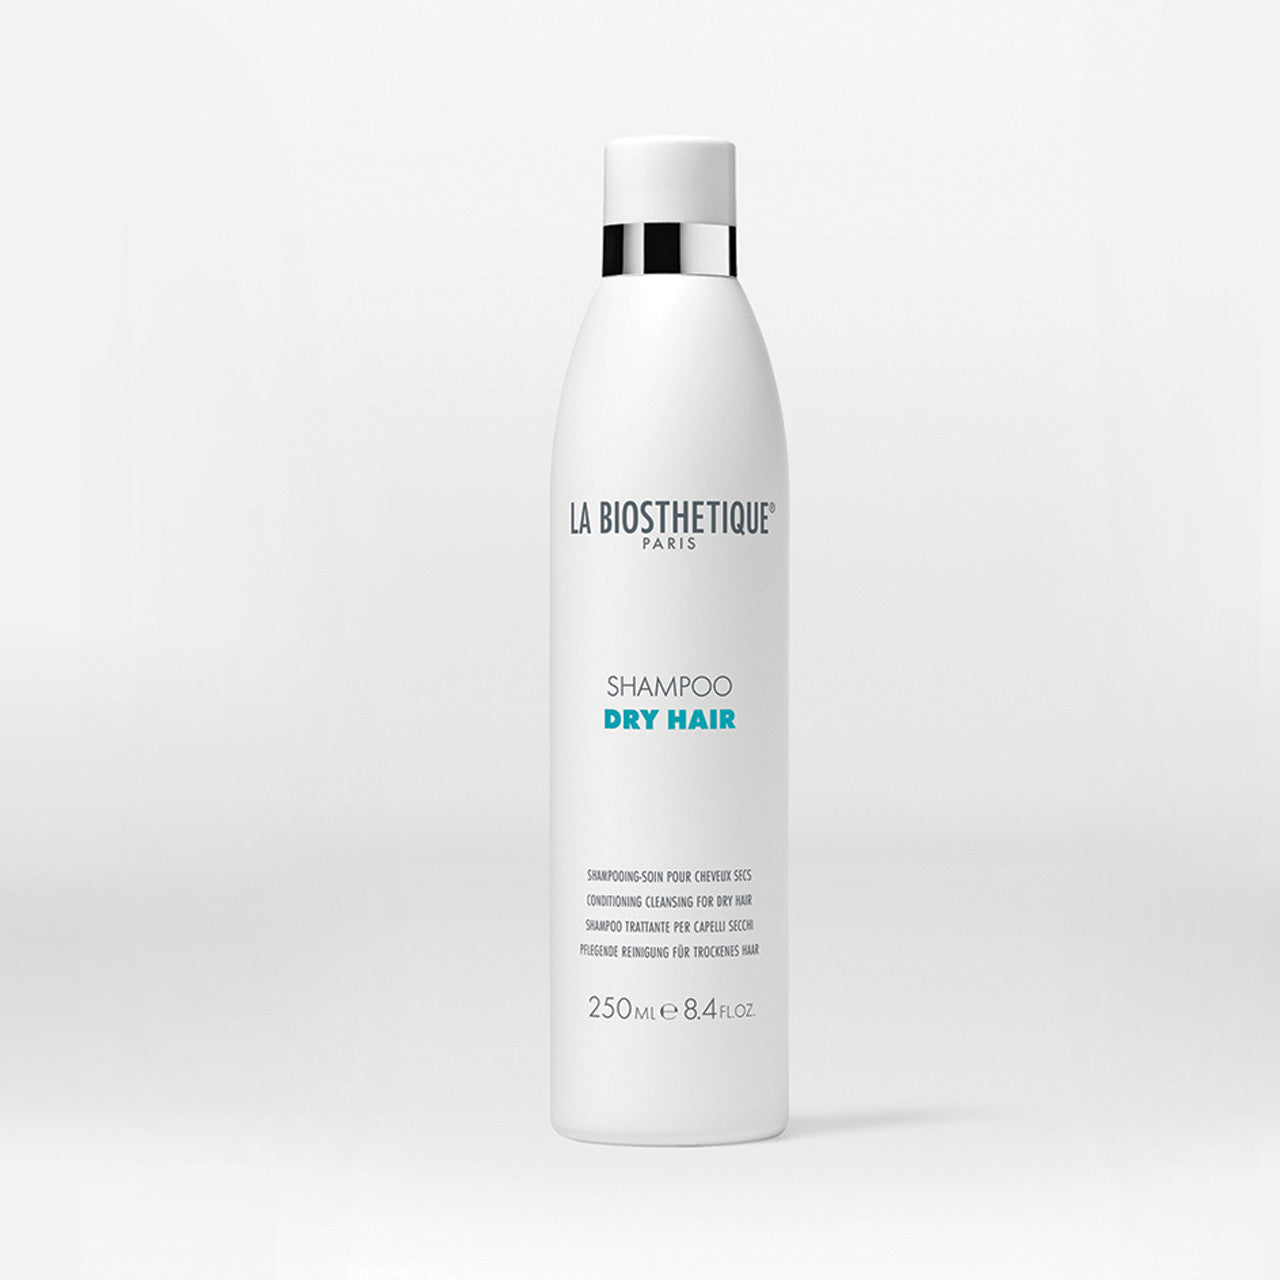 La Biosthetique's Dry Hair Shampoo - 250ml